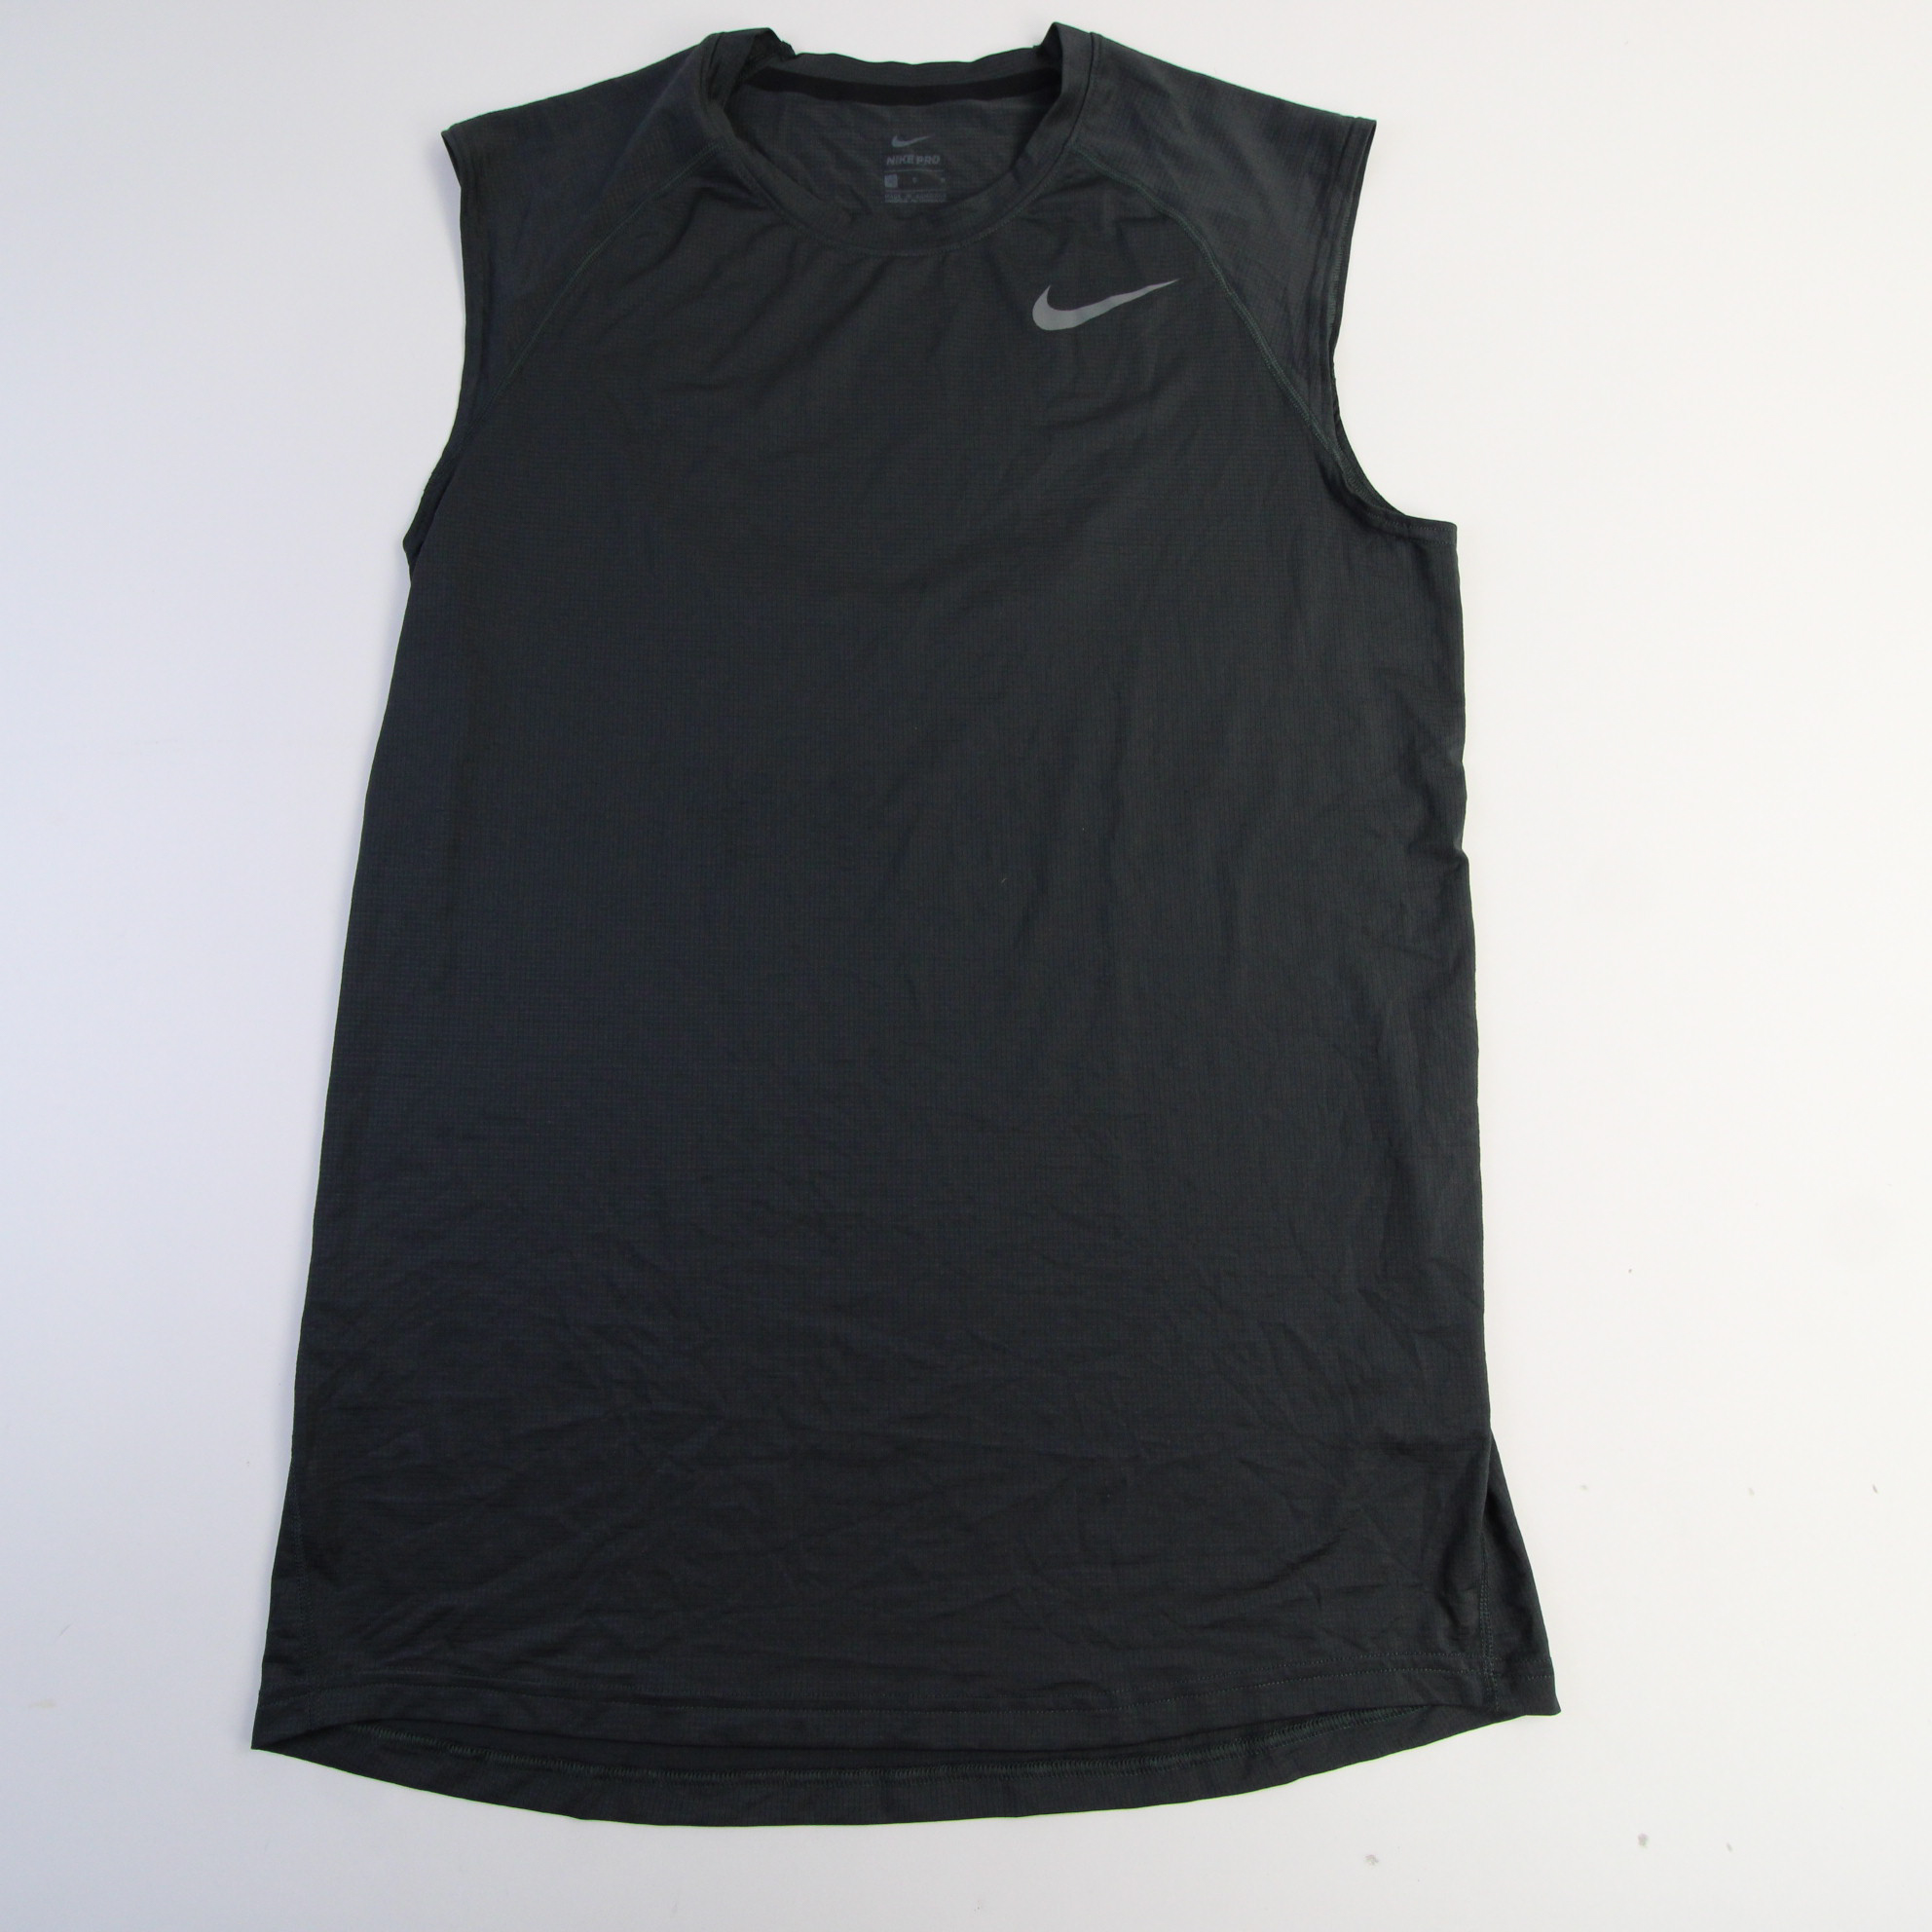 Nike Pro Sleeveless Shirt Men's Dark Gray Used | eBay